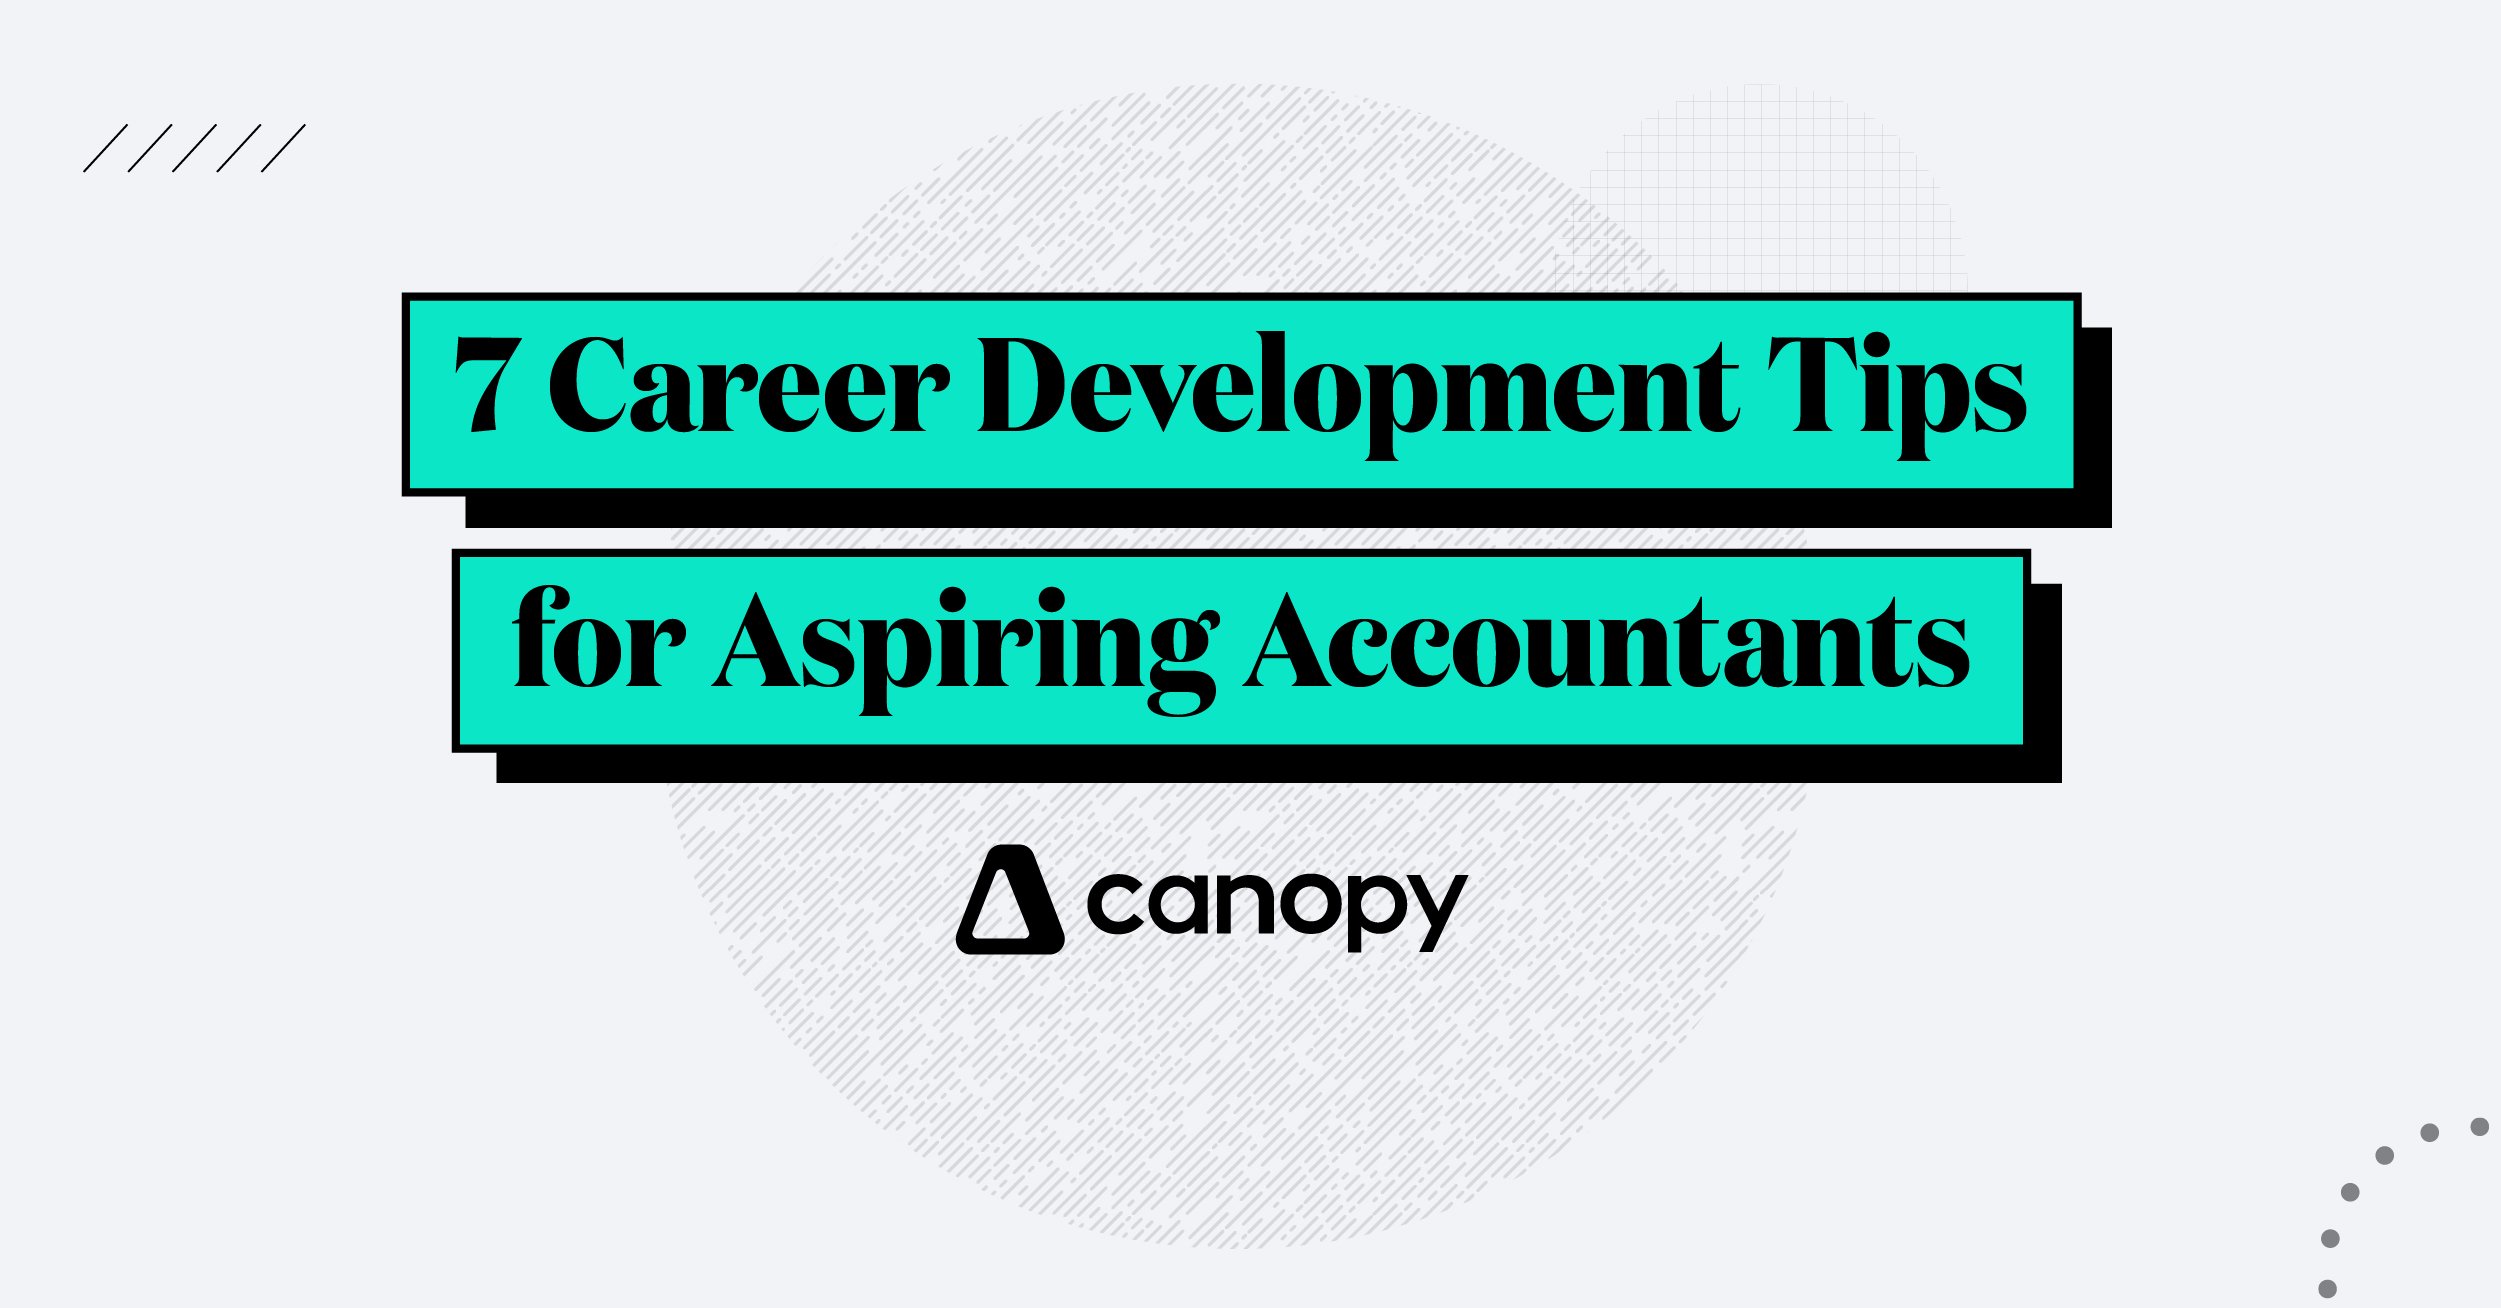 7 Career Development Tips for Aspiring Accountants